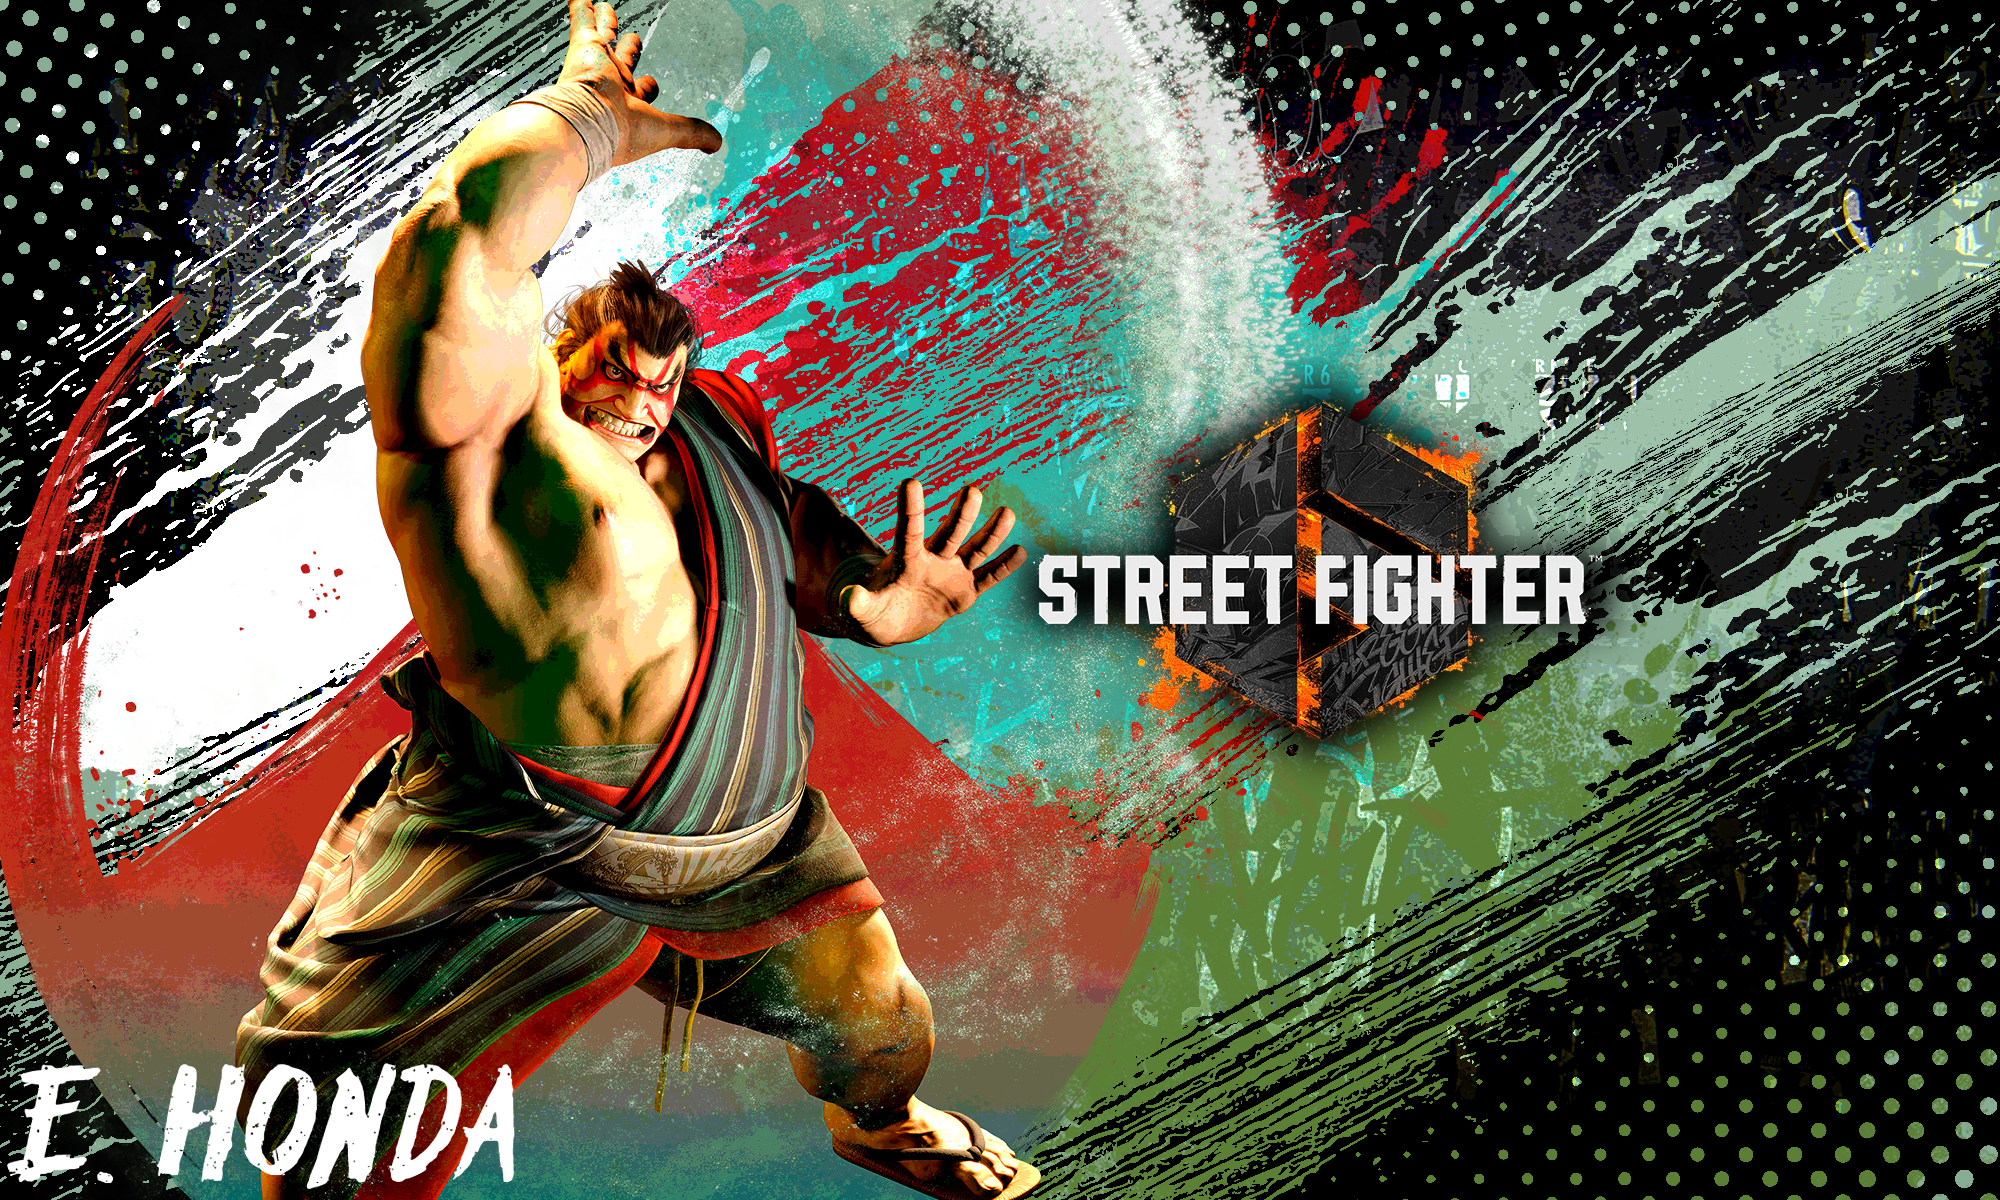 Street Fighter 6 - Zangief wallpaper by DaKidGaming on DeviantArt